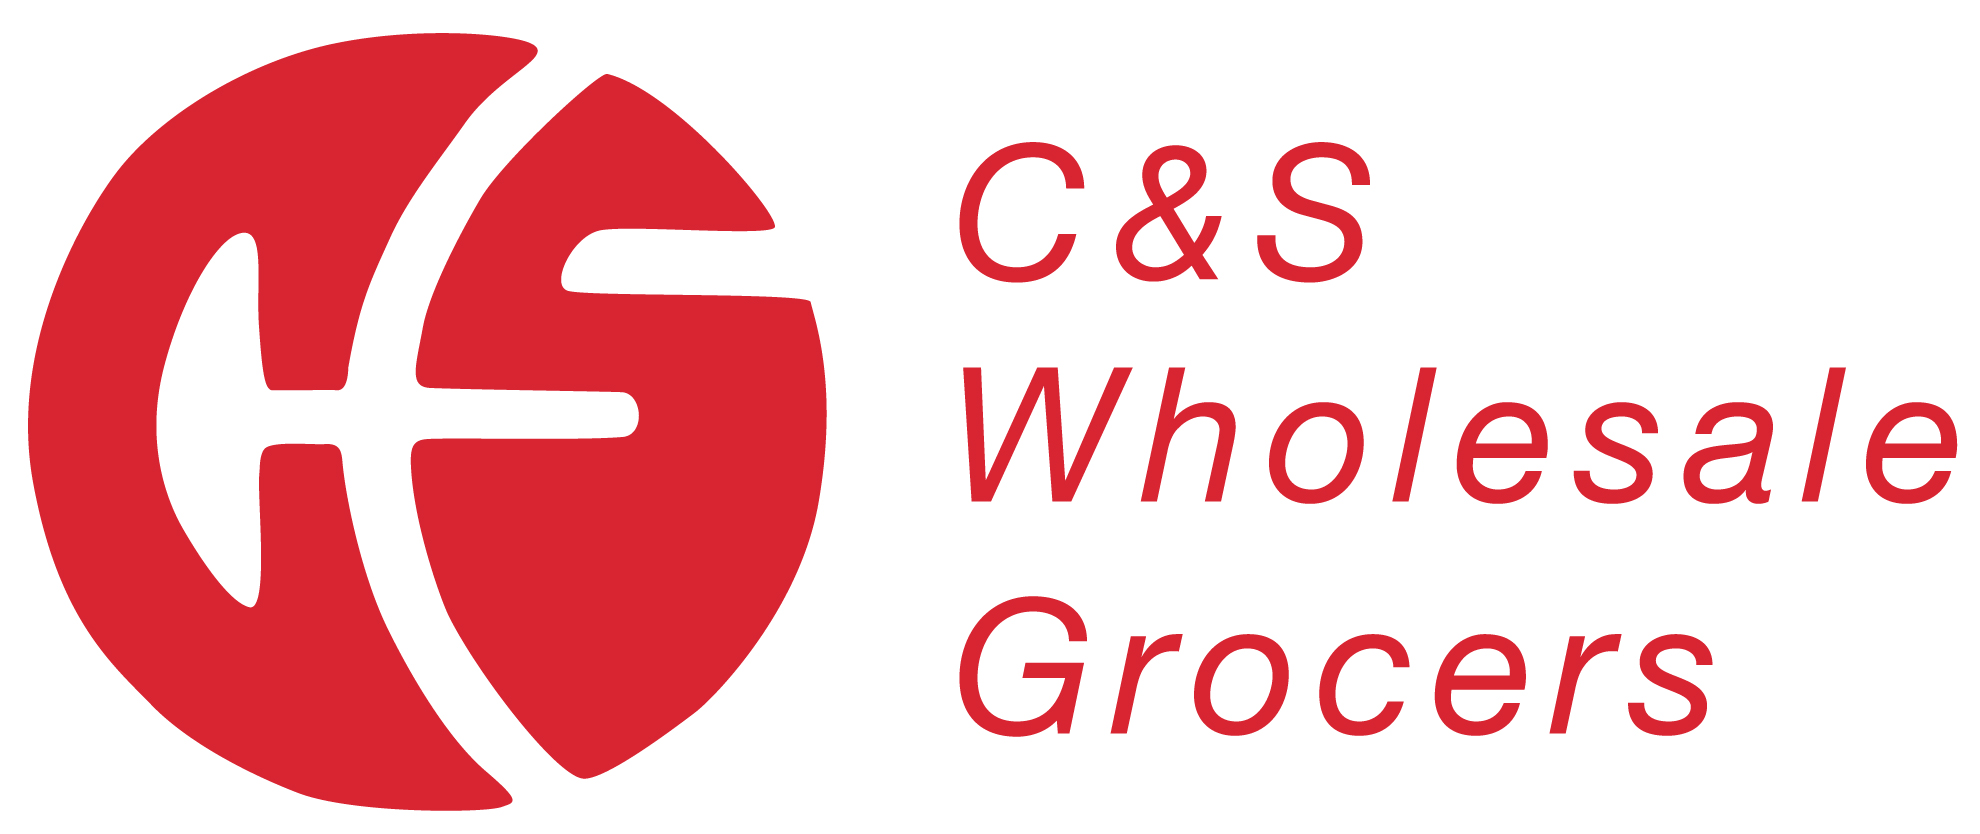 C & S Wholesale Grocers